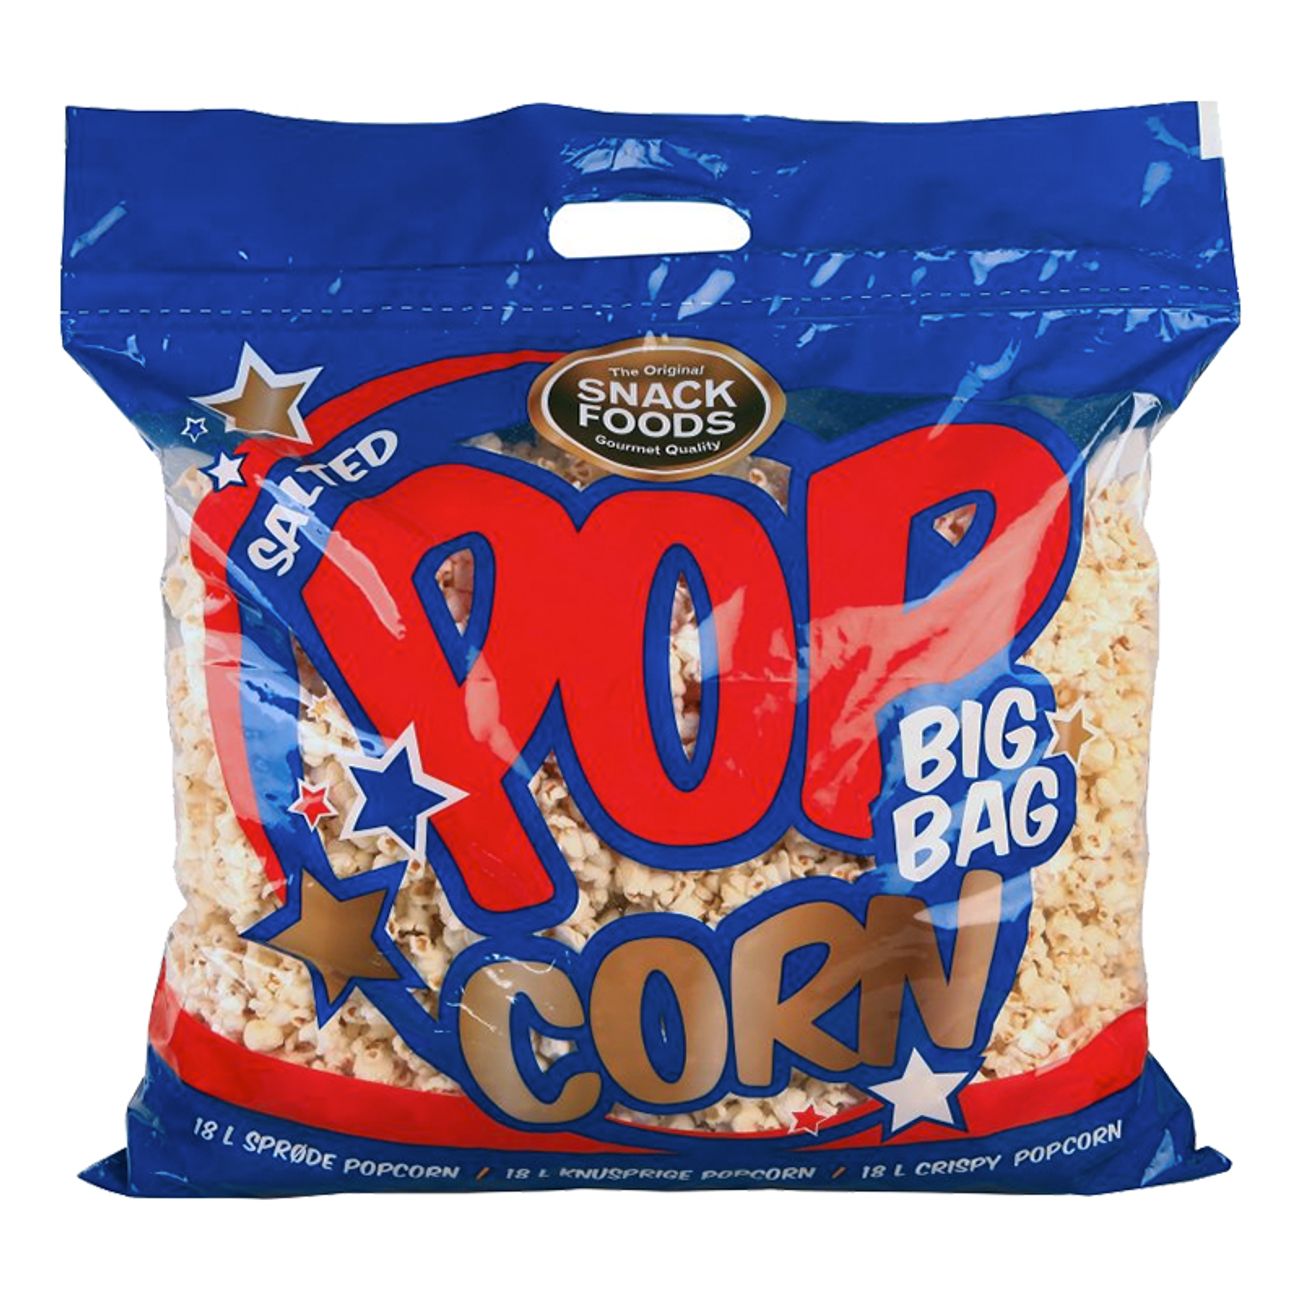 Costco Sells Massive Bag of Popcorn